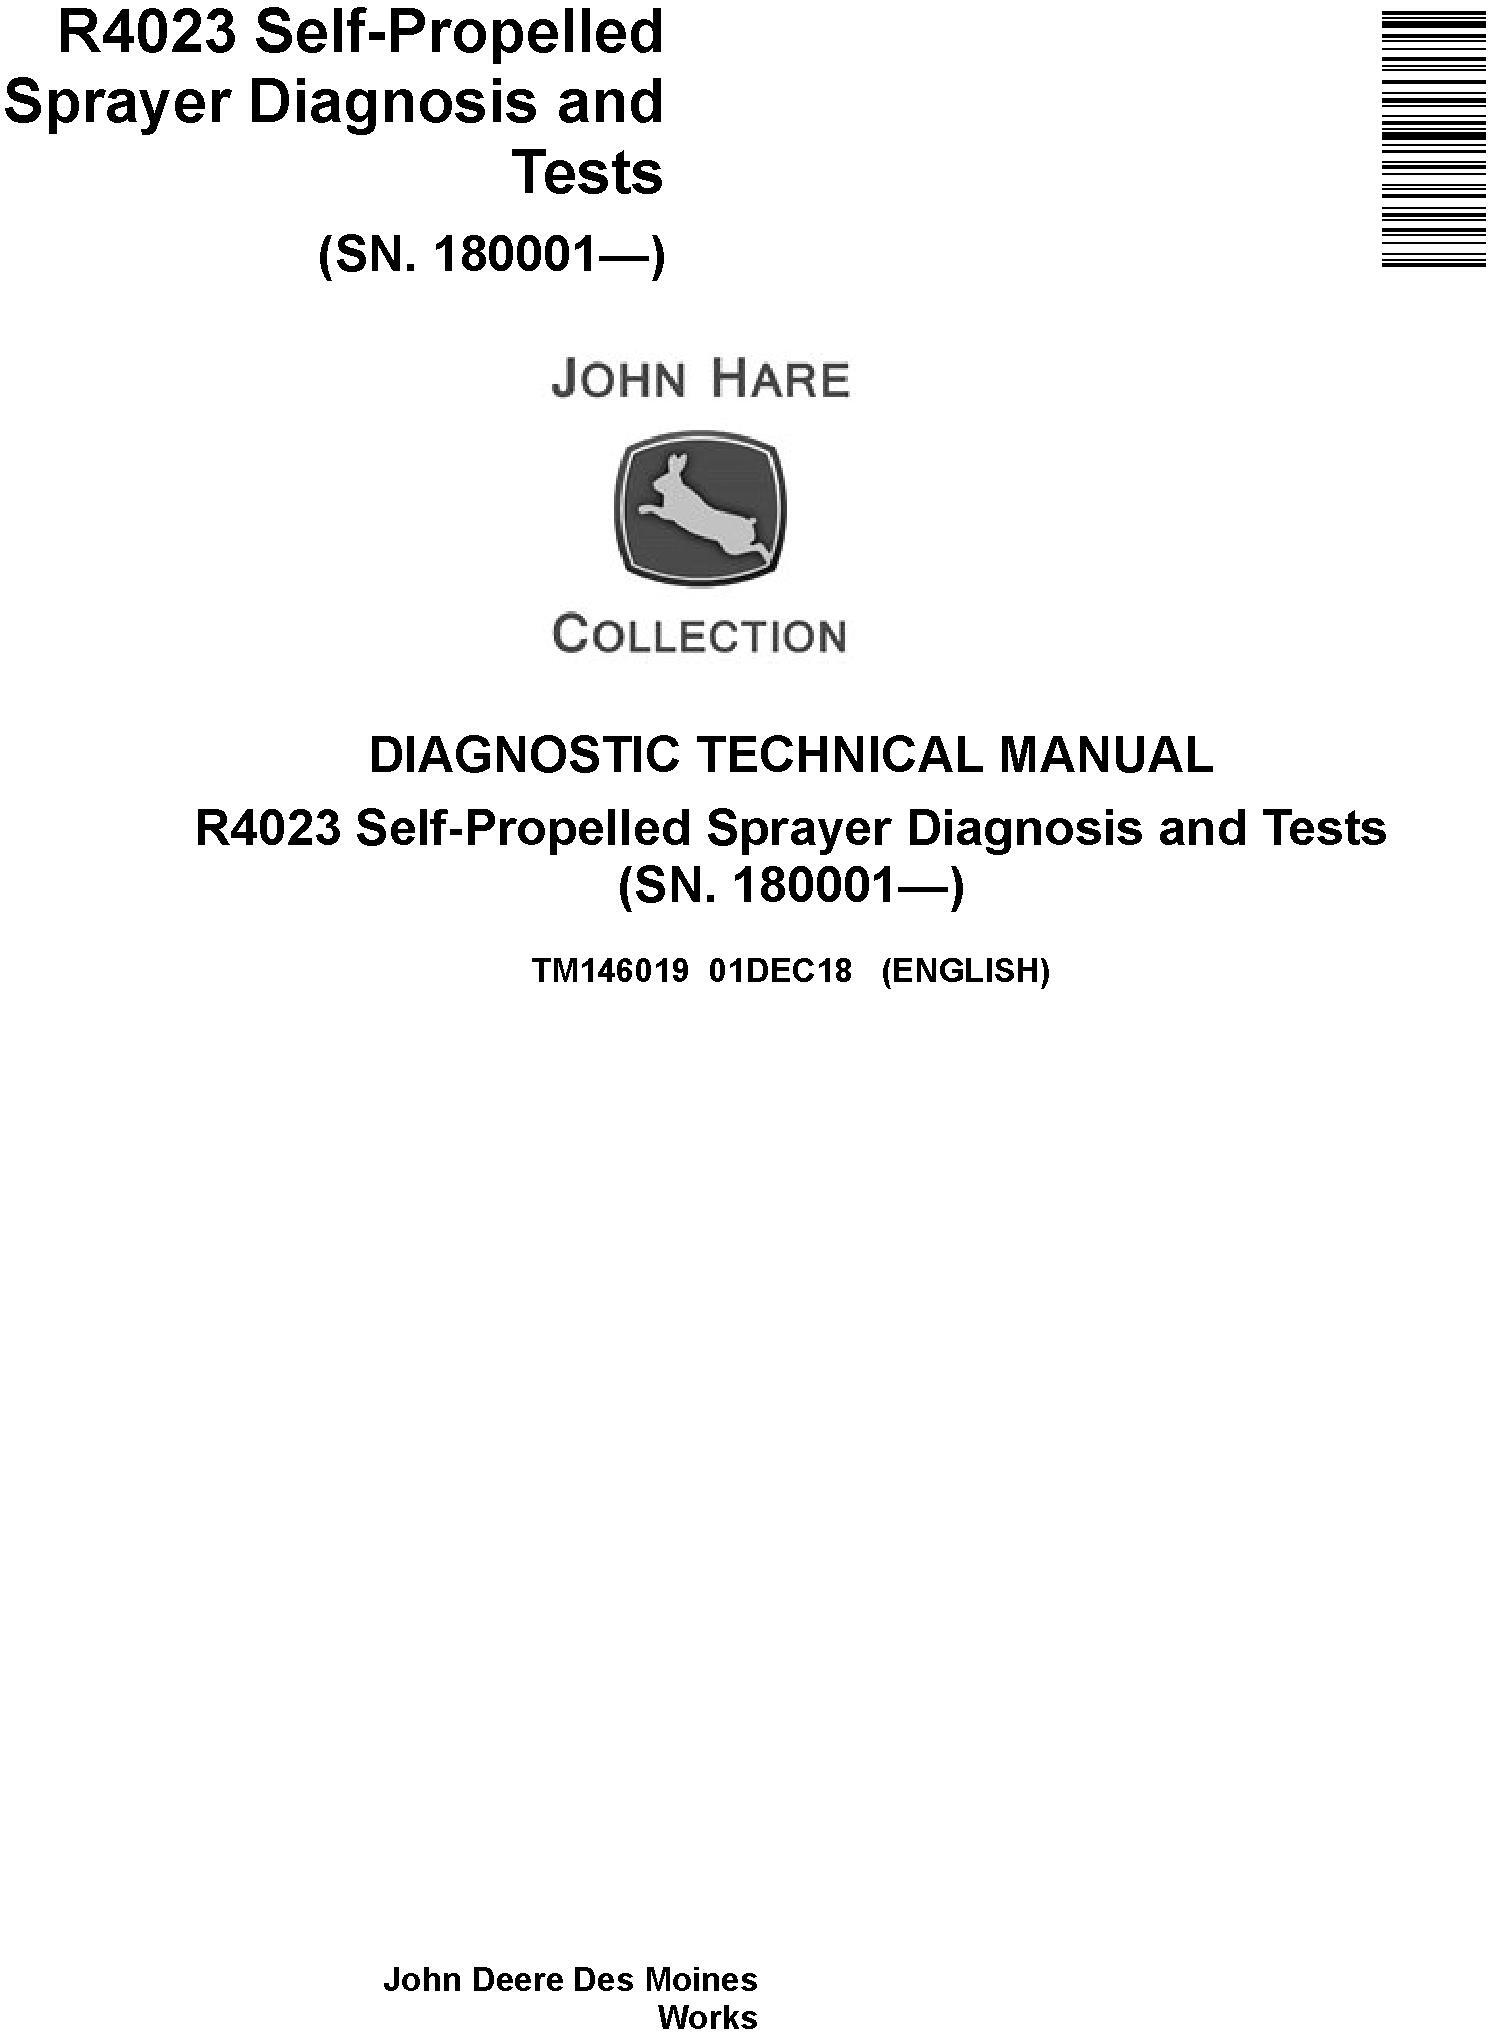 John Deere R4023 Self-Propelled Sprayer (SN. 180001-) Diagnostic Technical Manual (TM146019) - 19243